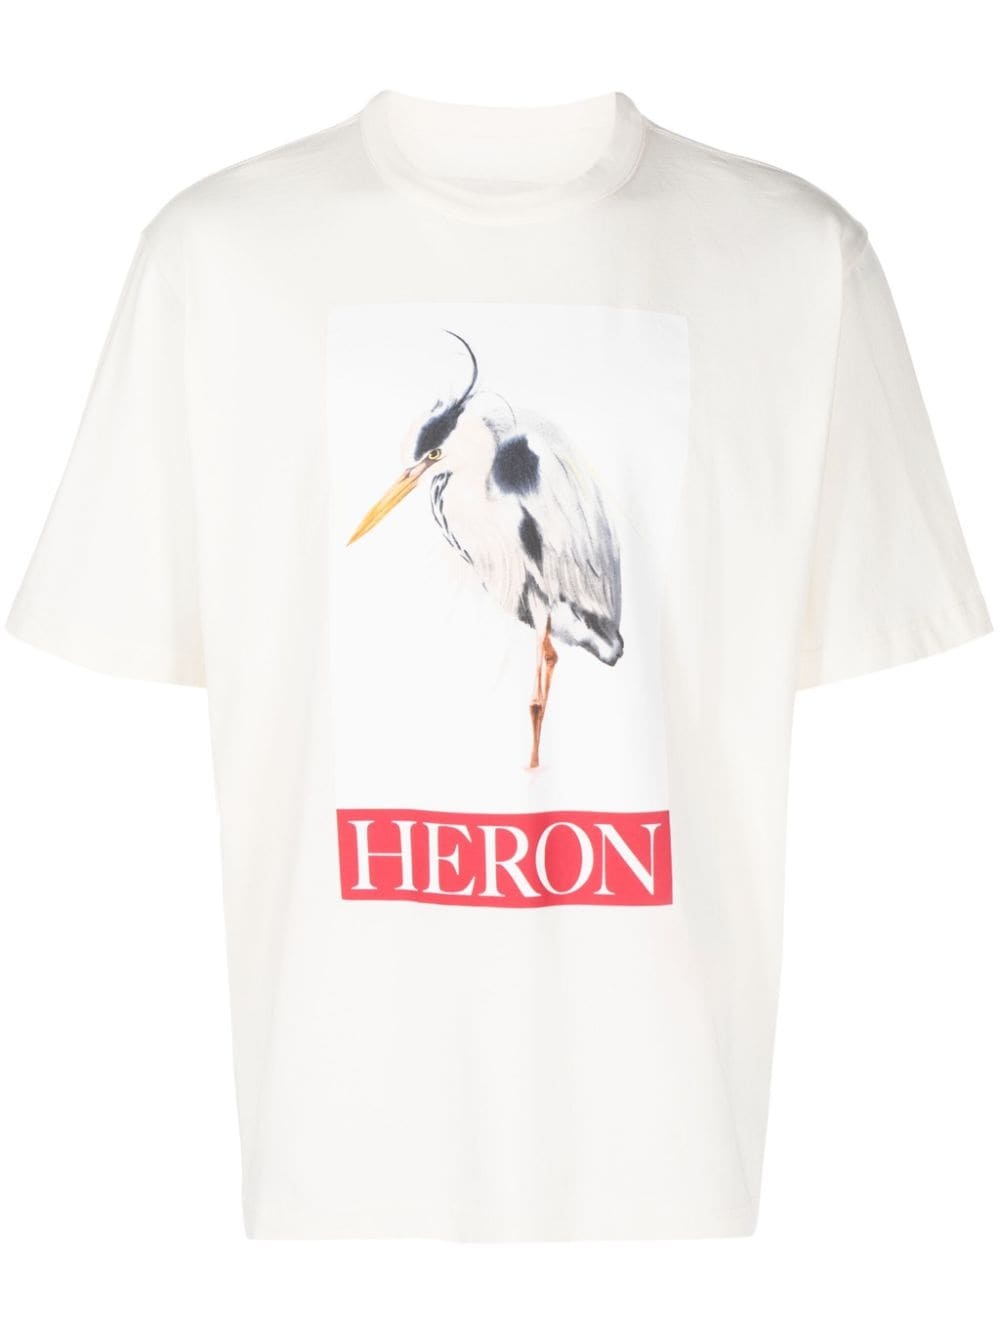 Heron Bird Painted cotton T-shirt - 1